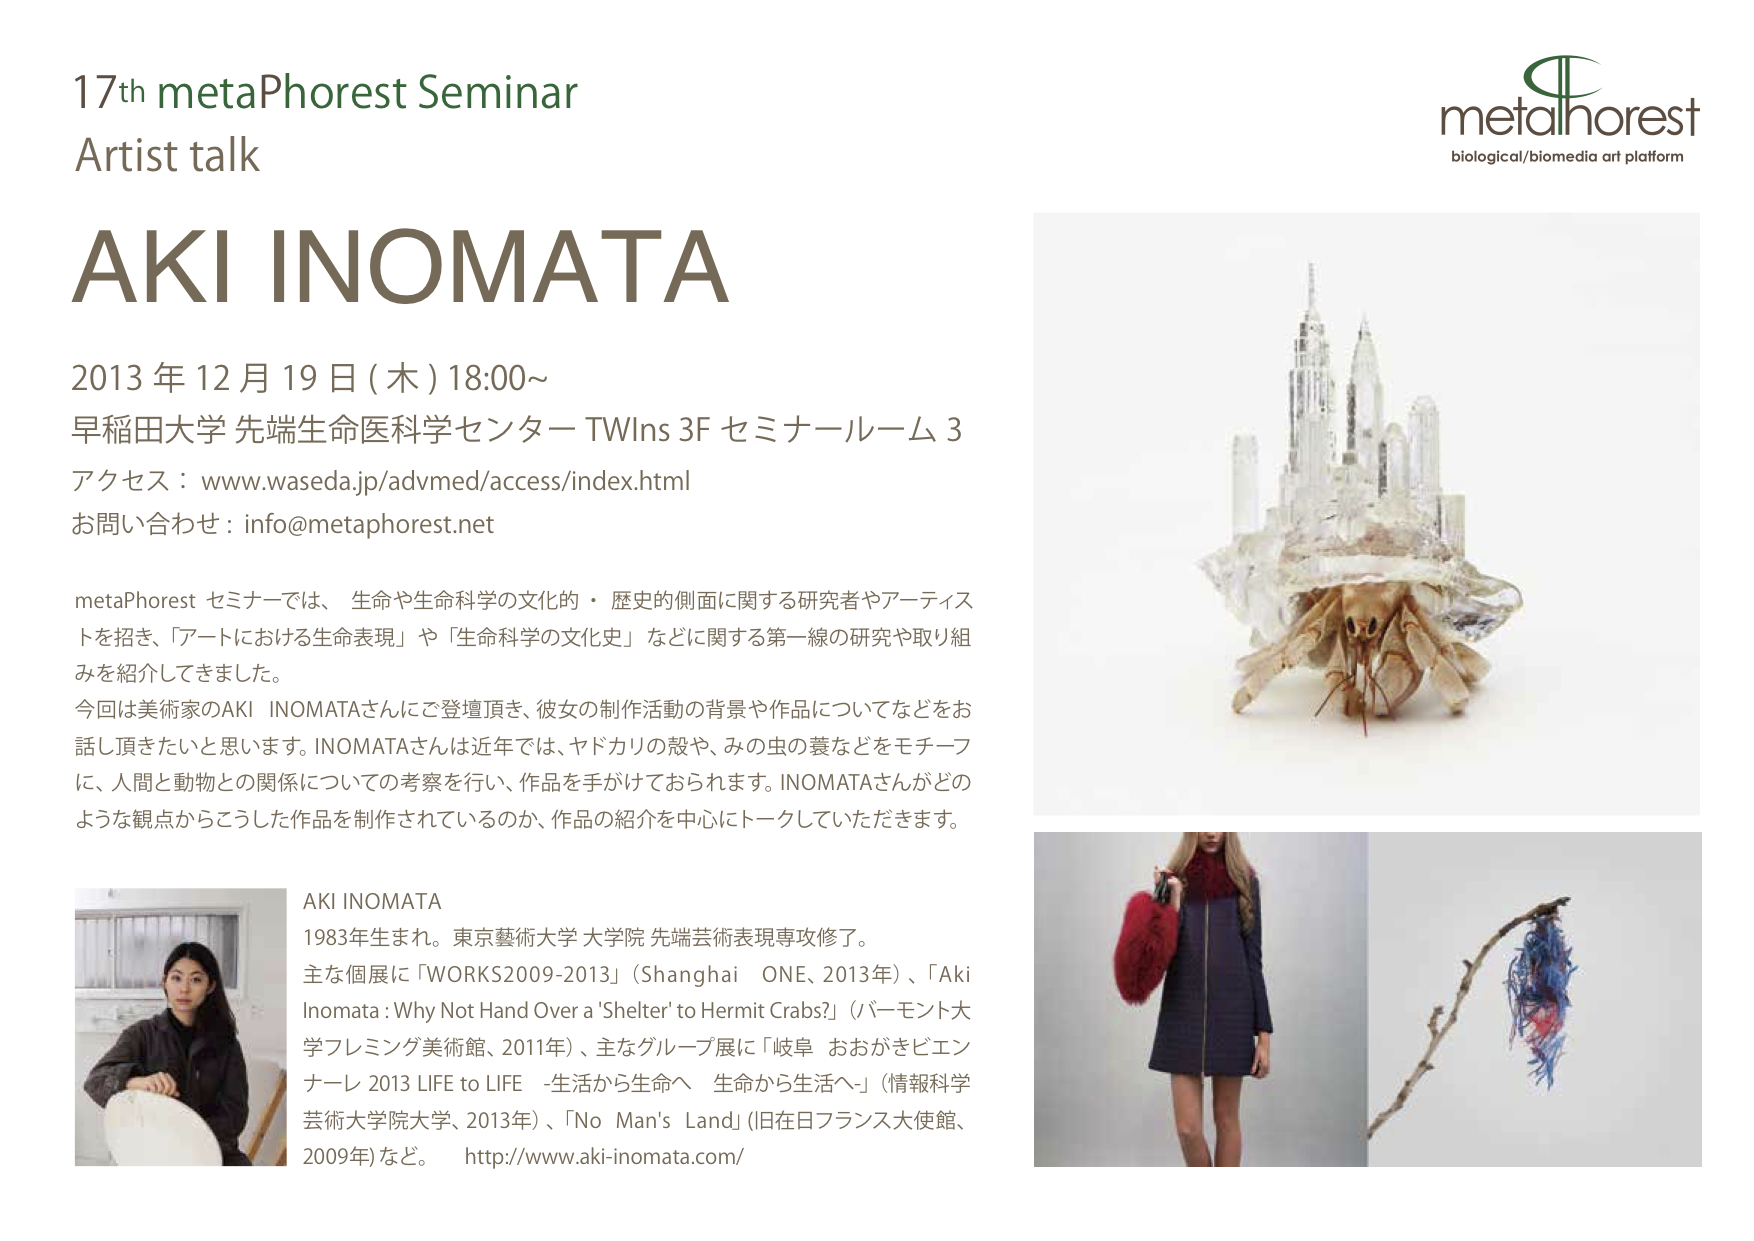 Talk: metaPhorestセミナー AKI INOMATA アーティストトーク